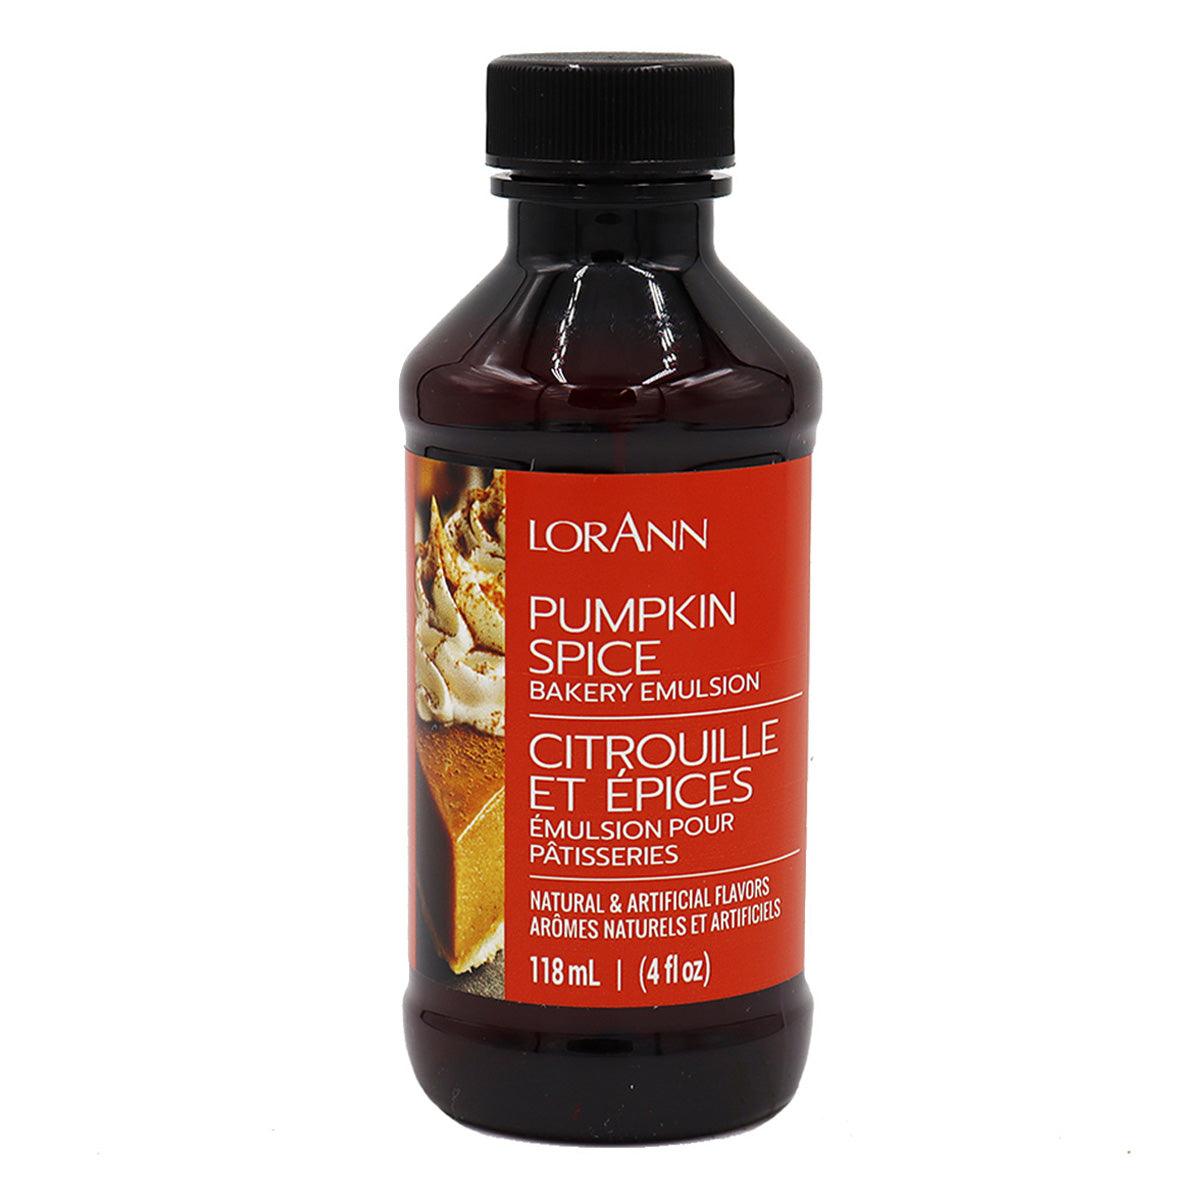 Pumpkin Spice Emulsion 4 fl oz (118ml) - ViaCheff.com